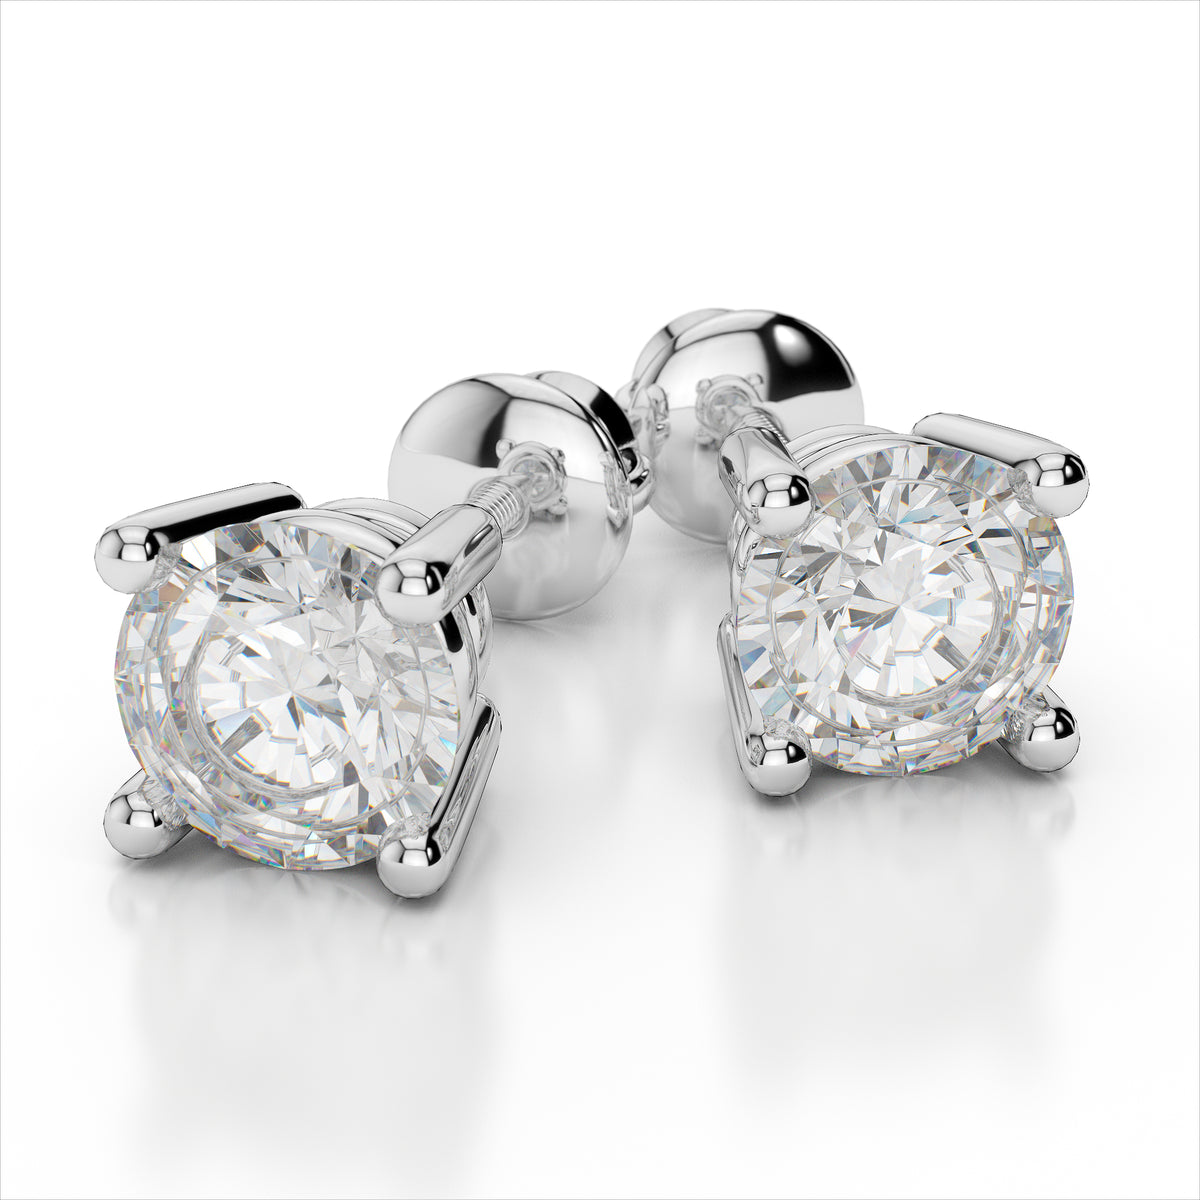 2ctw LG Diamond Earrings